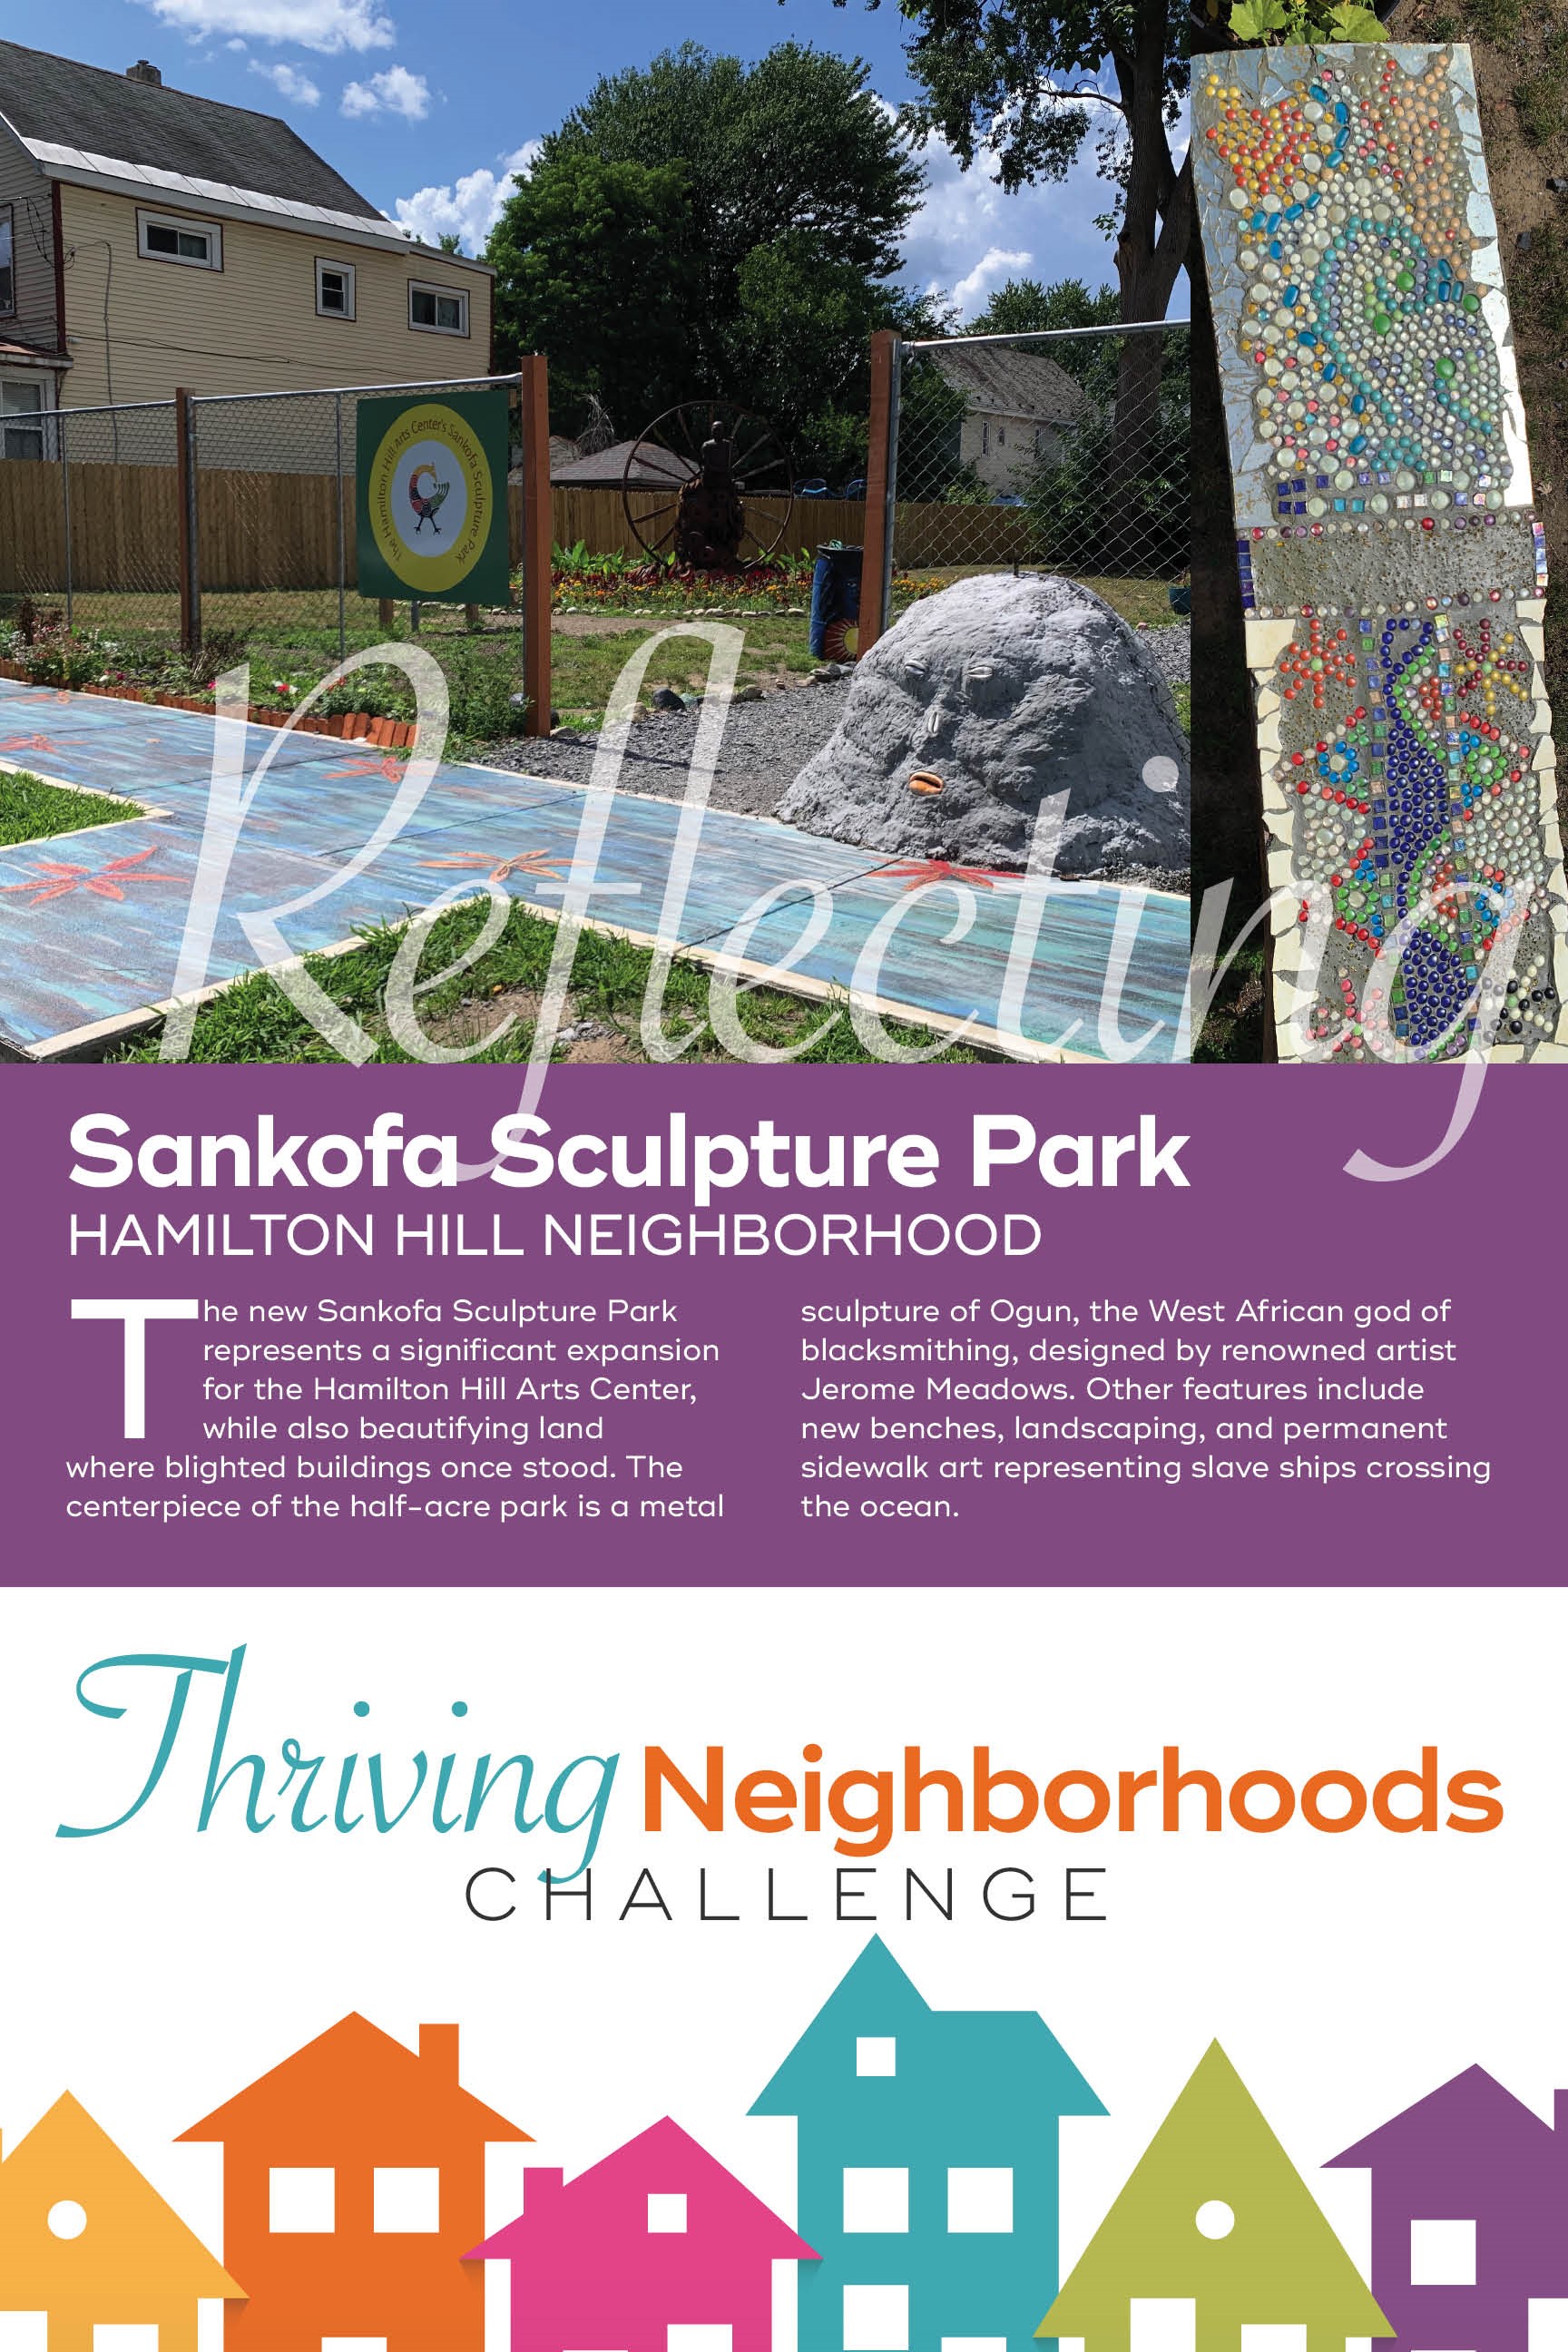 Uploaded Image: /vs-uploads/thrivingchallenge/TNC - Sankofa Sculpture Park Board.jpg